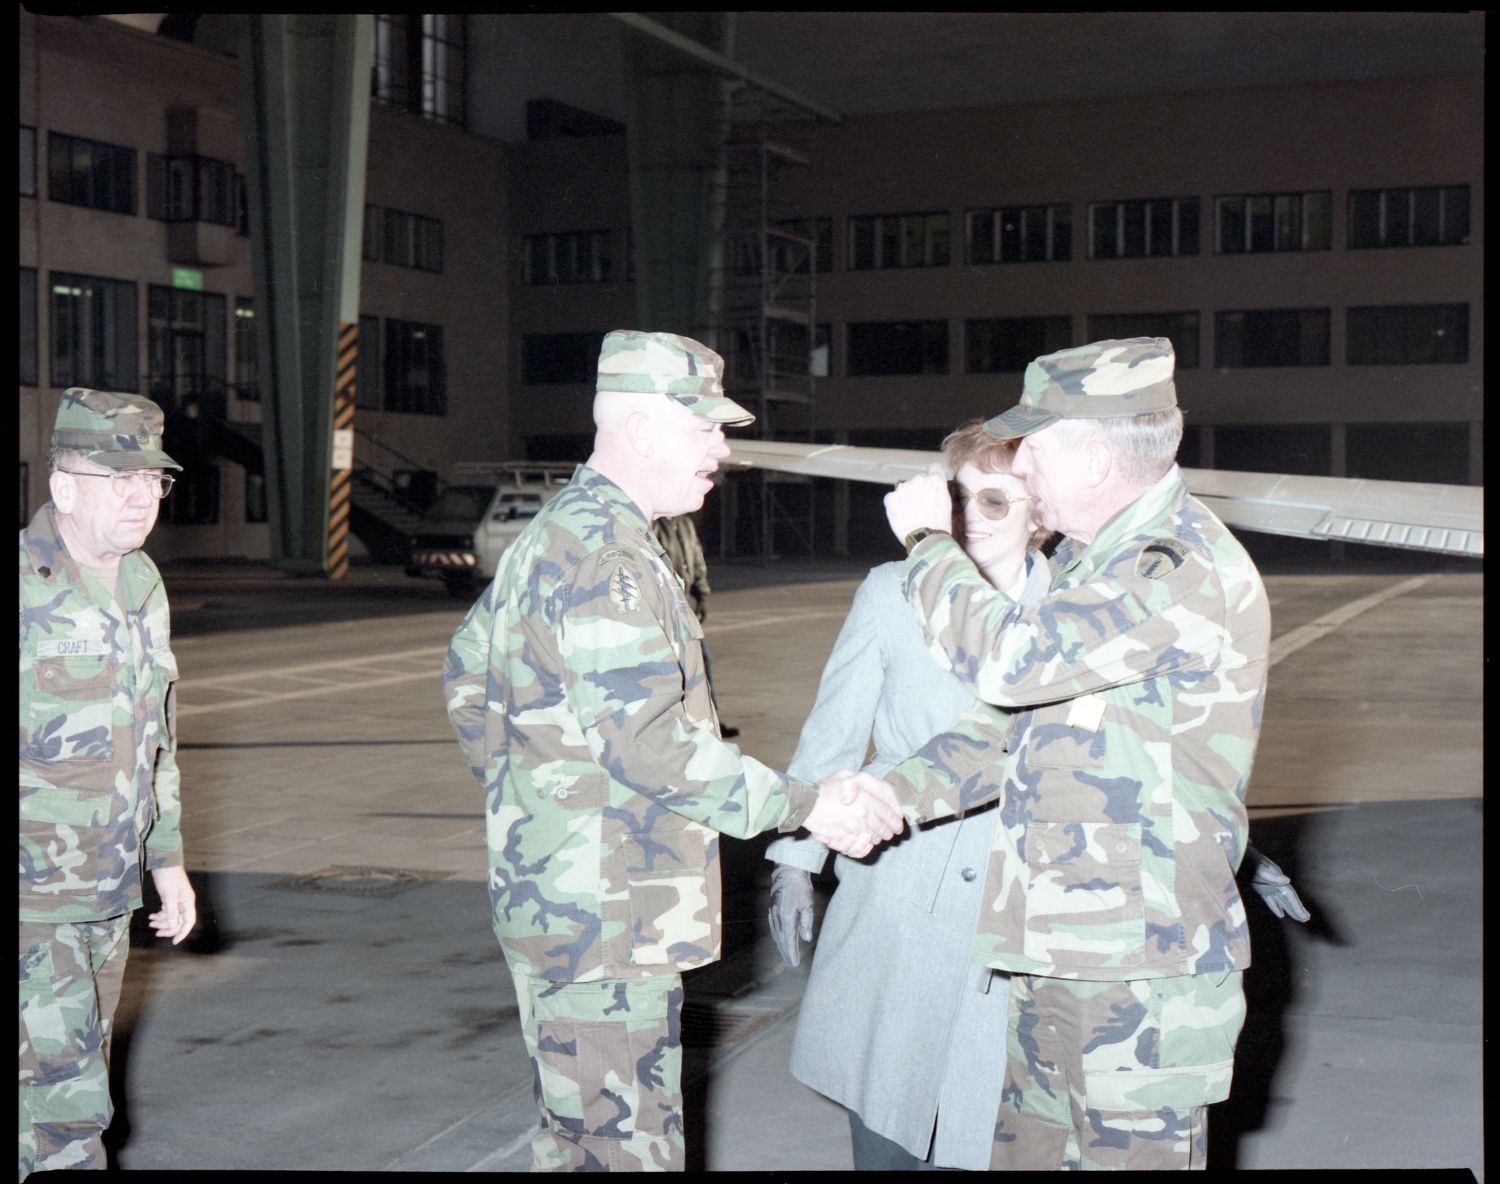 Fotografie: Besuch von Sergeant Major of the Army Glen E. Morrell in West-Berlin